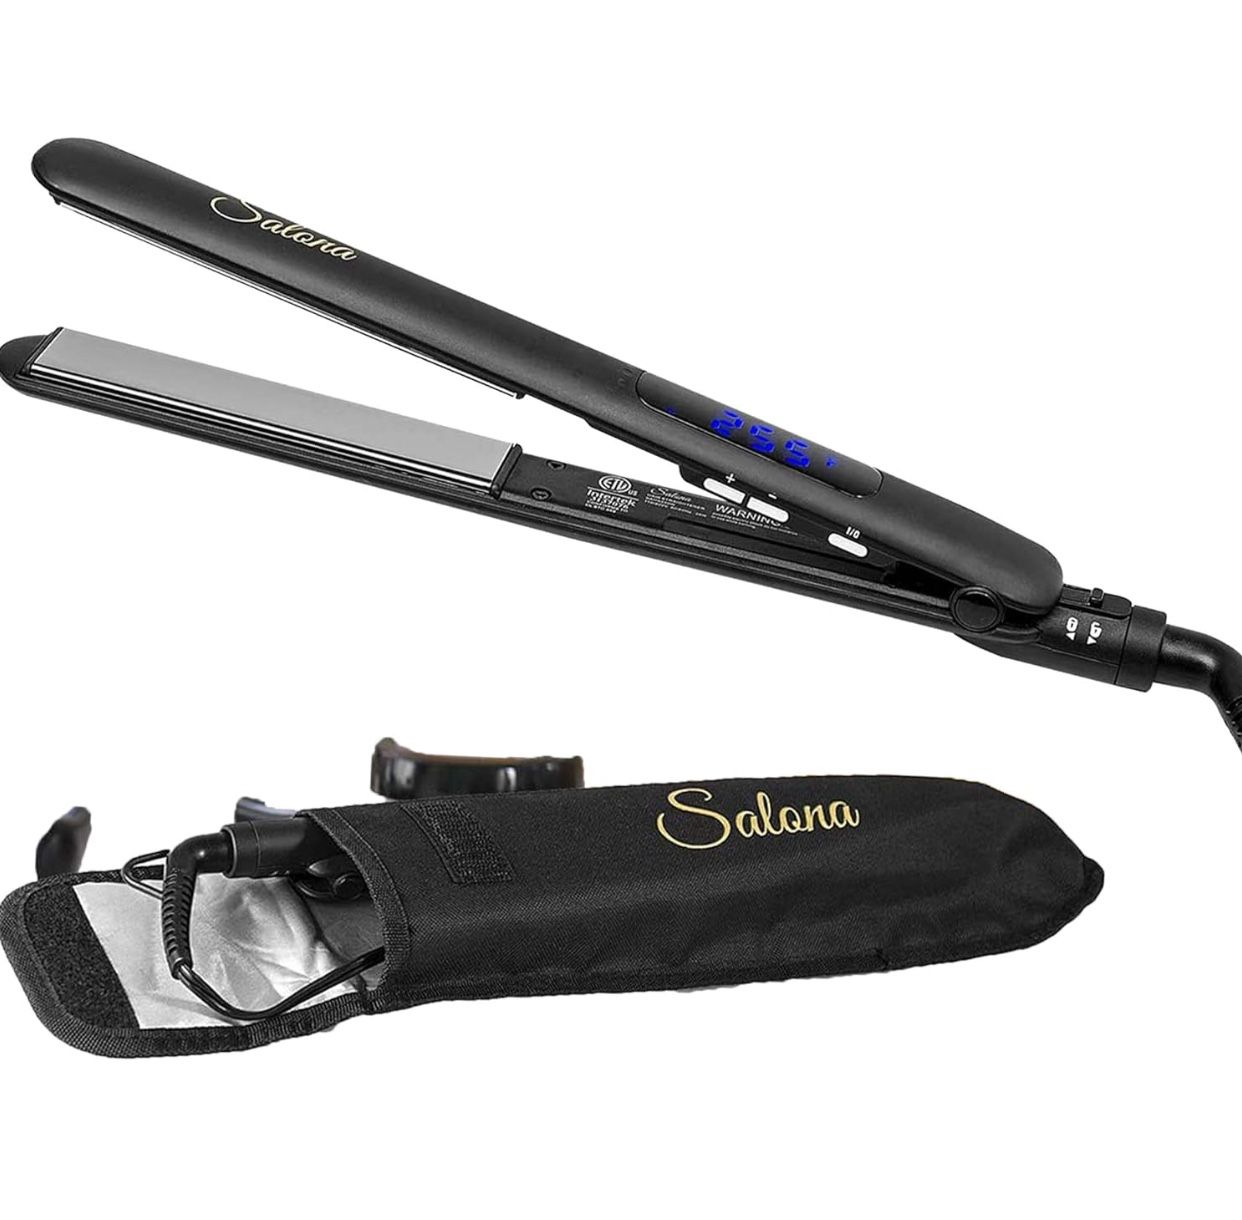 BRAND NEW SALONA Titanium Coated Hair Straightening Iron, Professional Flat Iron Hair Straightener and Hair Curler with Digital LCD Display